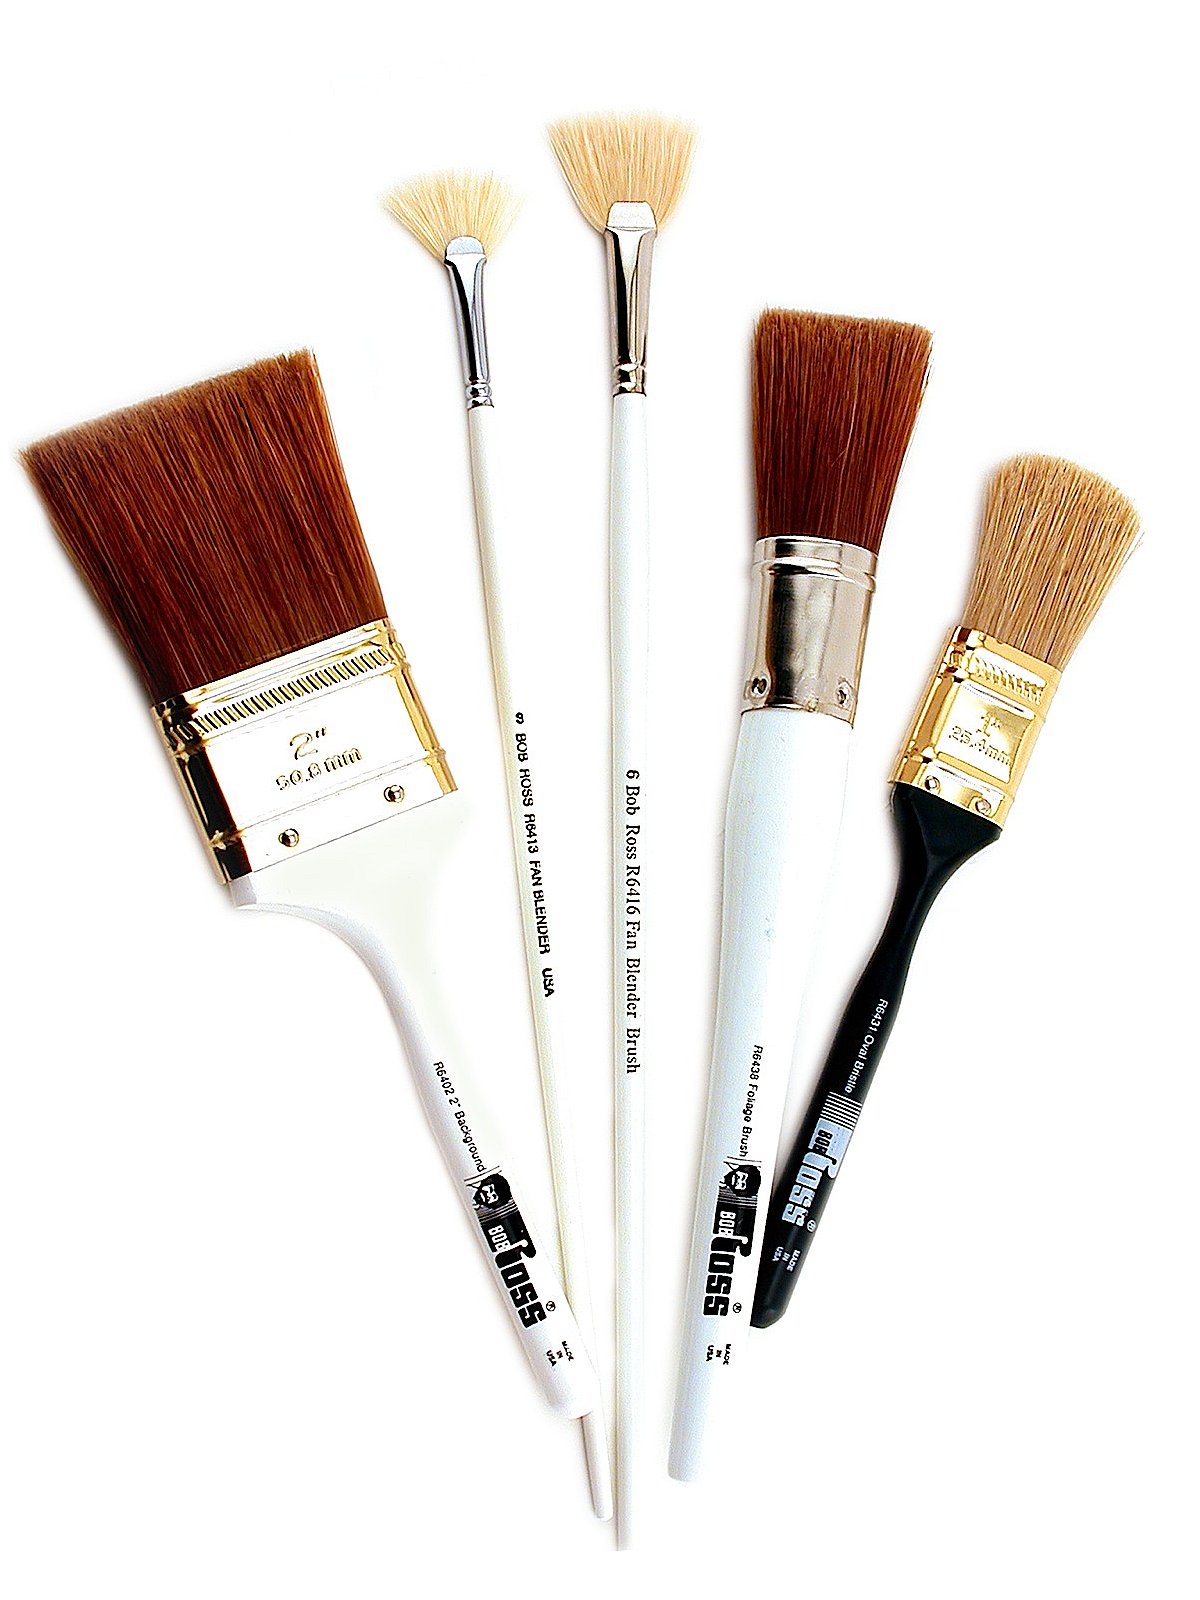 Bob Ross Art Brushes in Art Painting Supplies 